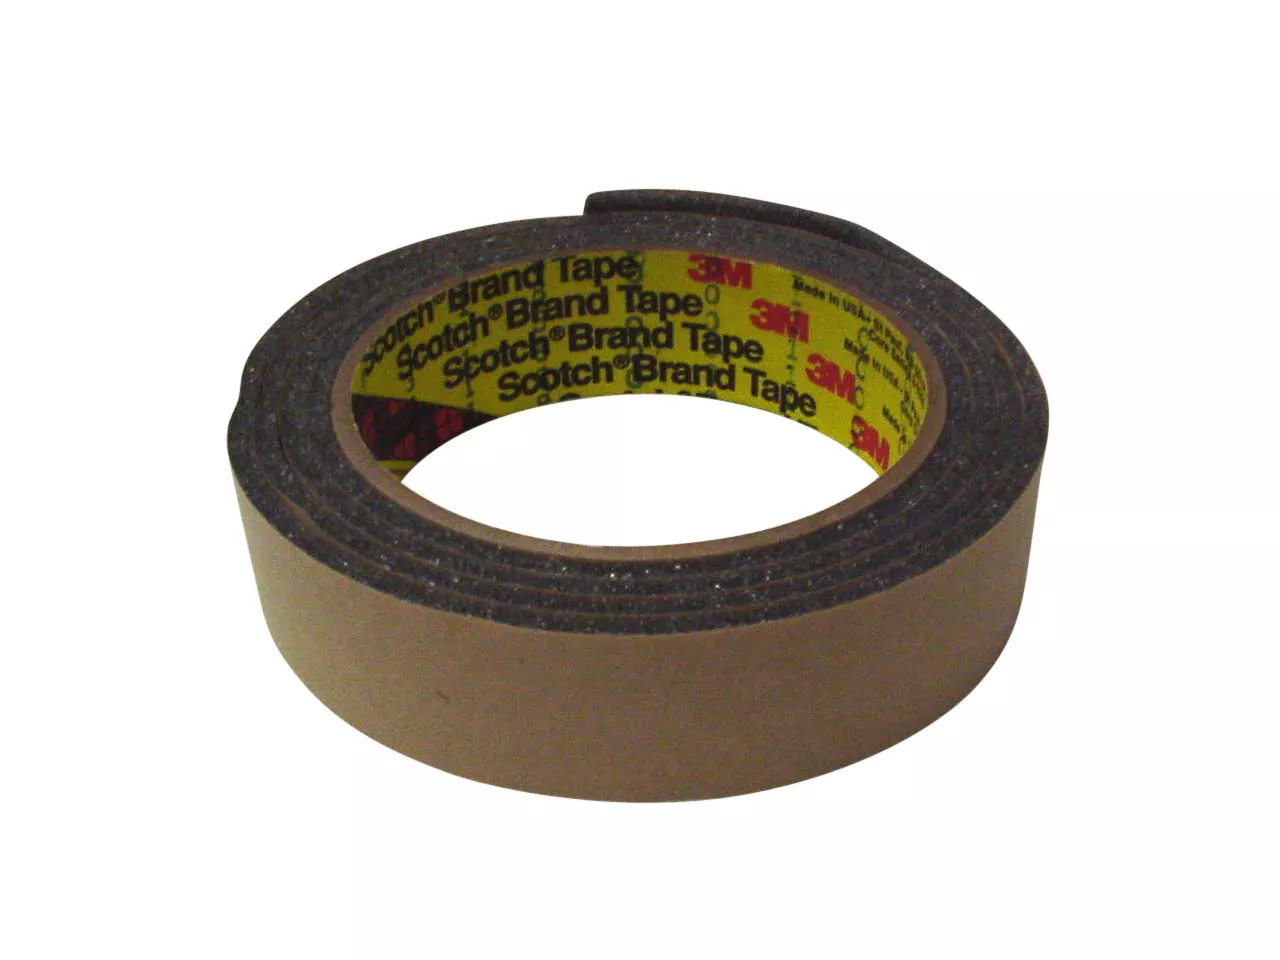 3M™ Urethane Foam Tape 4314, Charcoal, Gray, 1 1/2 in x 18 yd, 250 mil,
6 Roll/Case